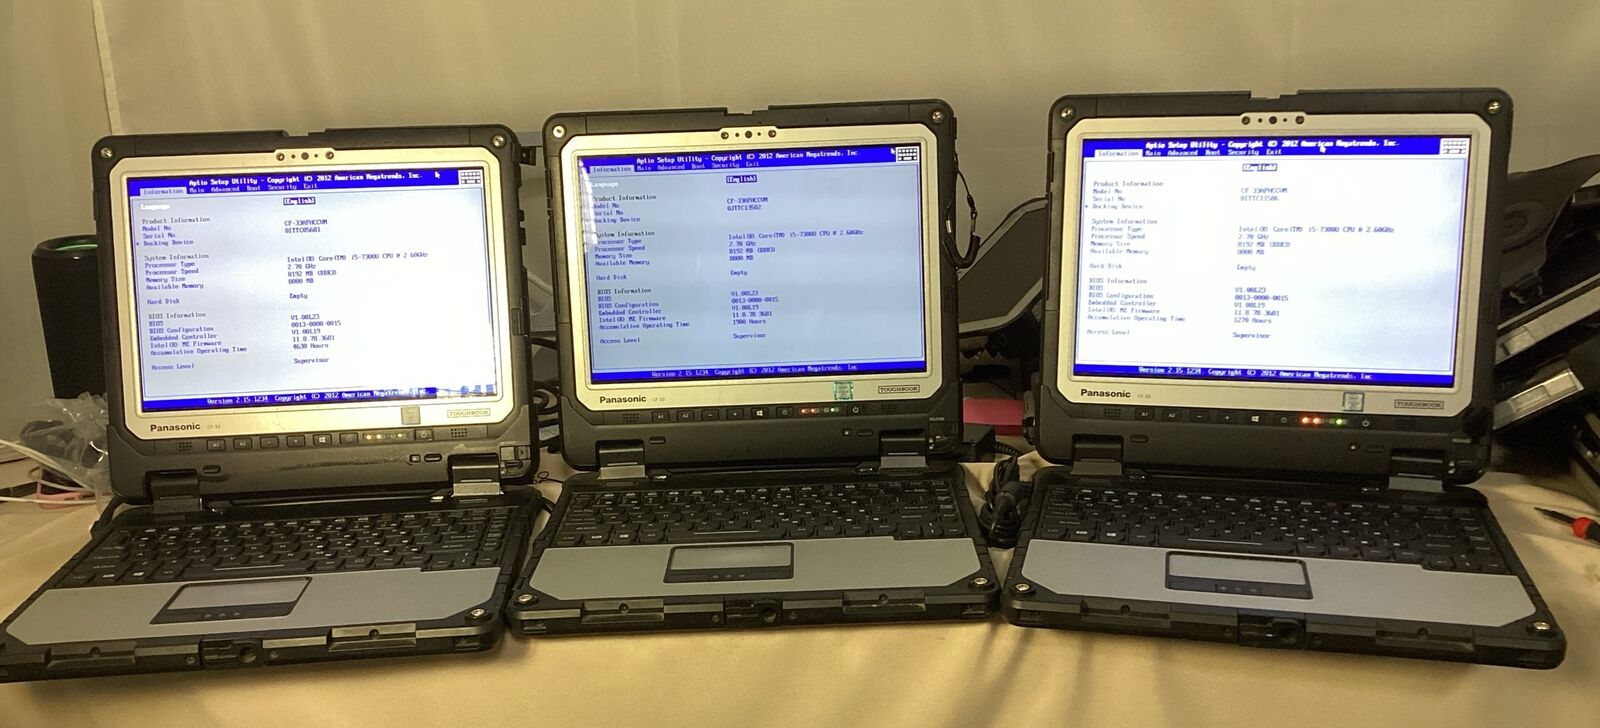 Lot of 4 Panasonic Toughbook CF33 i5-7300U @2.70 GHz, 8 GB RAM, NO HDD/OS